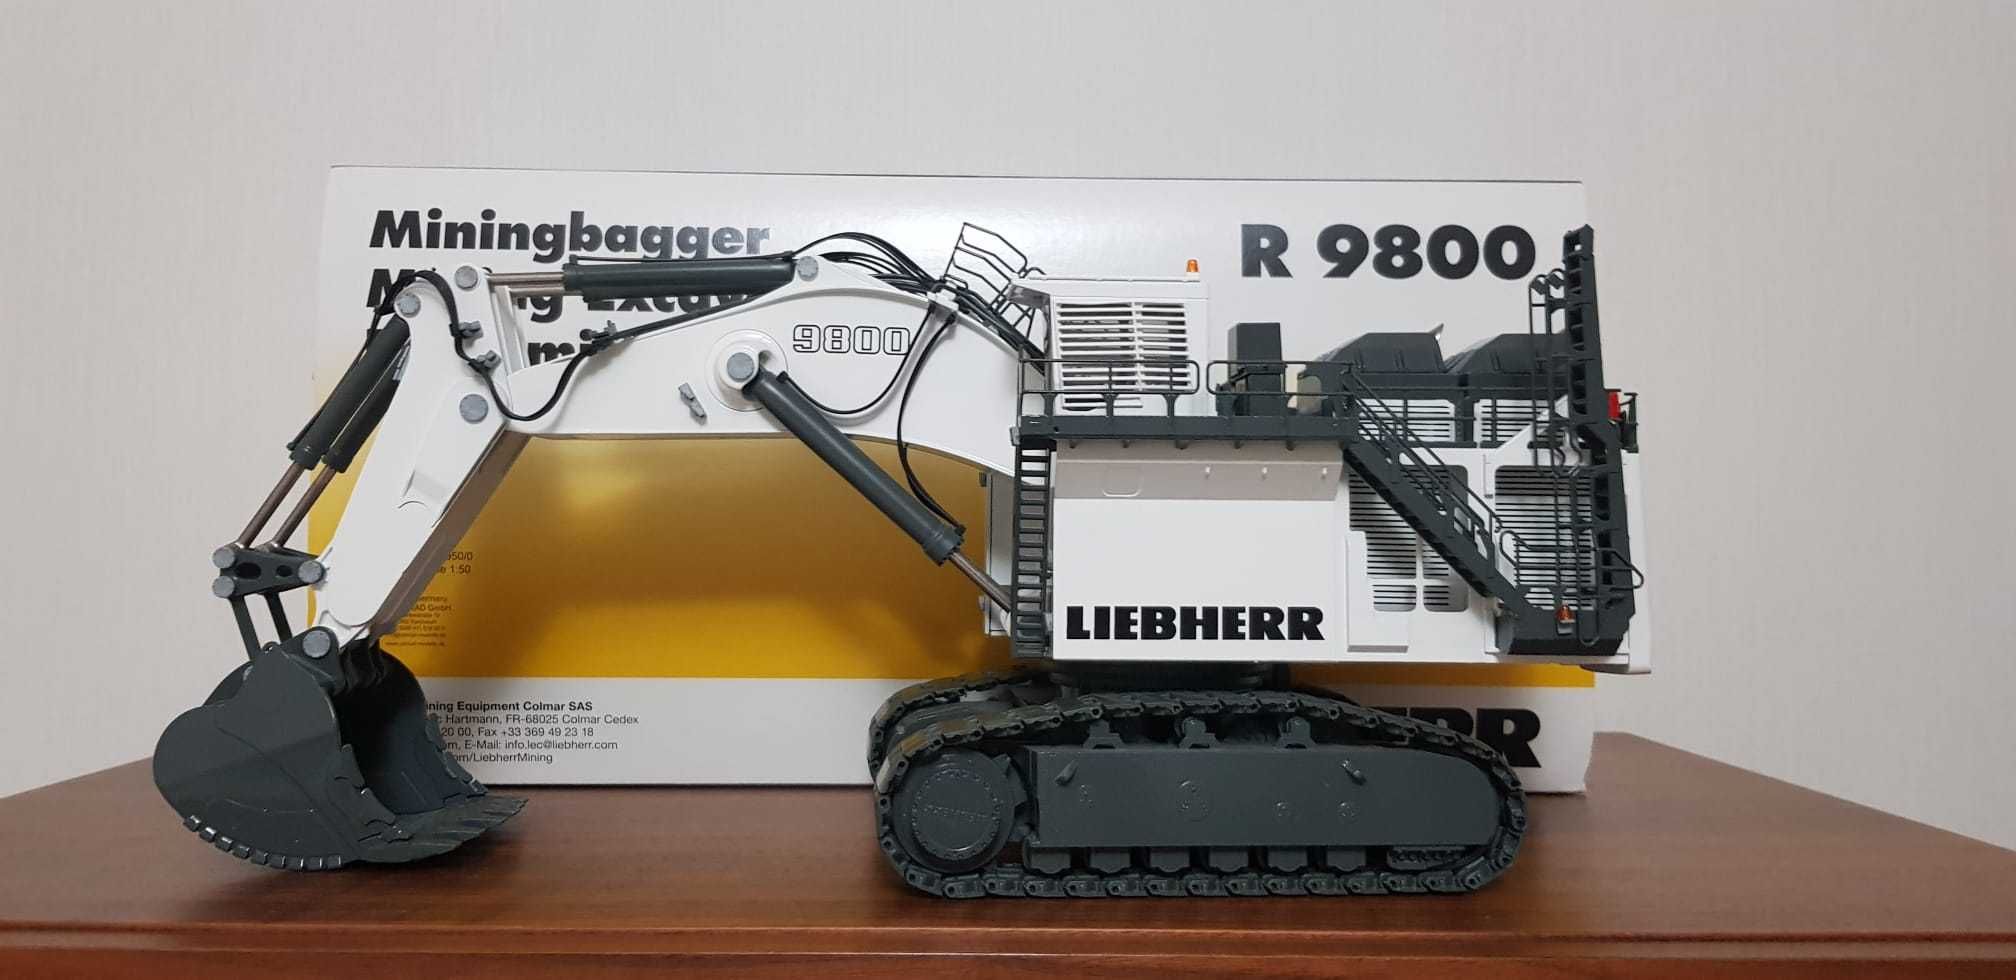 Miniatura LIEBHERR 9800 escala 1:50000